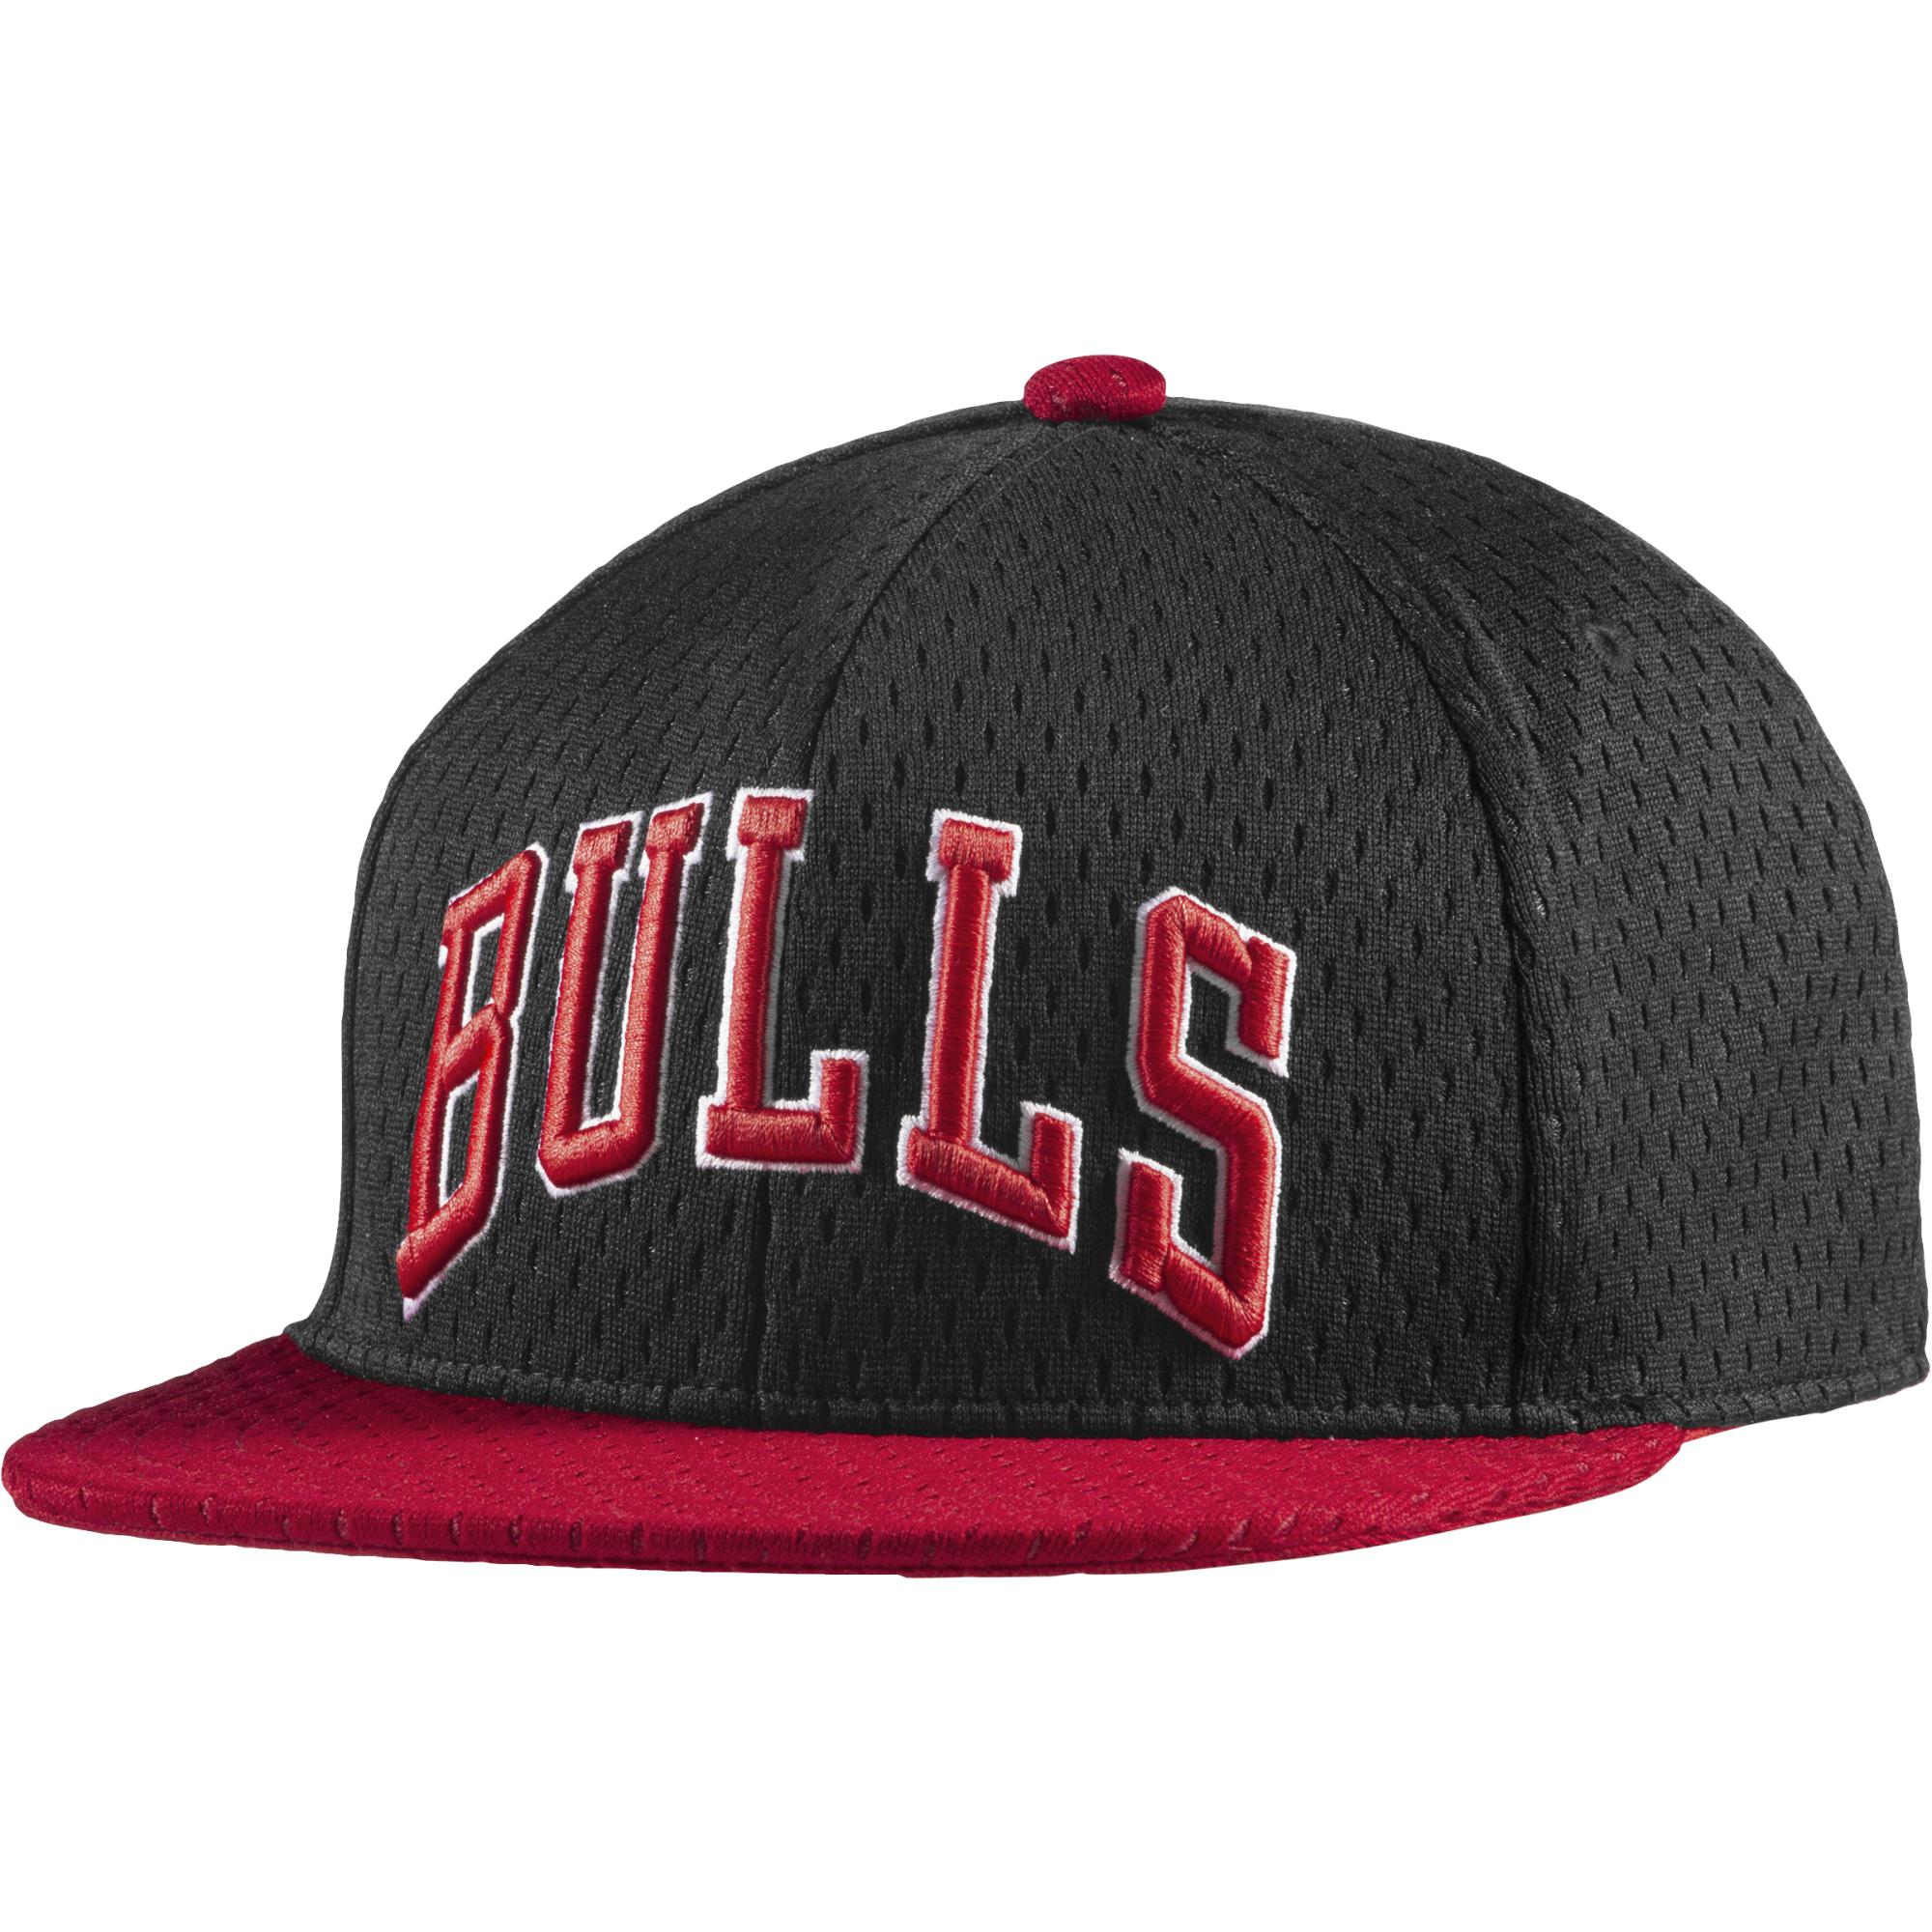 Adidas Originals NBA Gorra Mesh Bulls (negro/rojo)